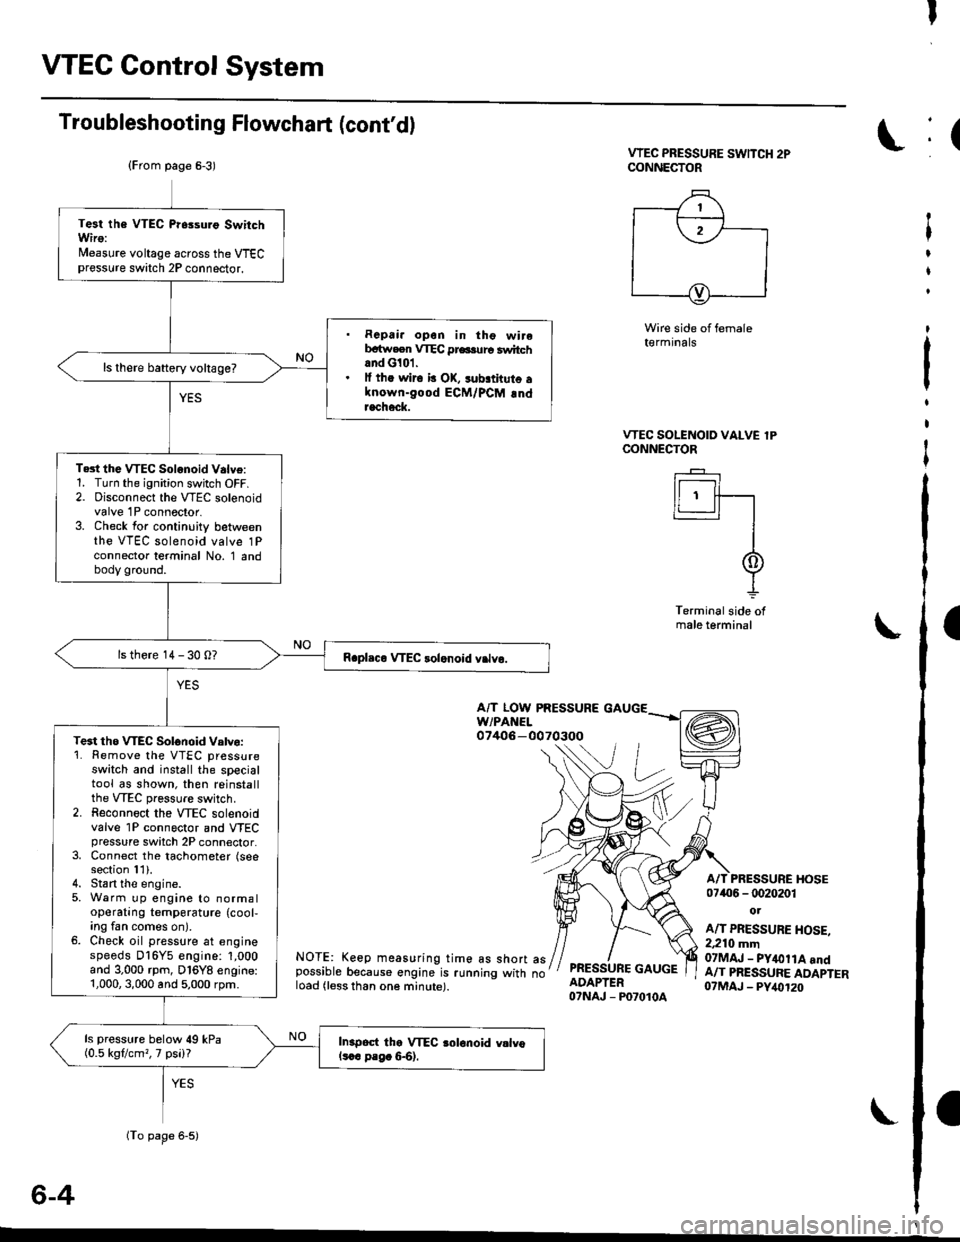 HONDA CIVIC 1998 6.G Workshop Manual I
VTEC Control System
Troubleshooting Flowchart (contd)
VTEC PRESSURE SwlTCH 2PCONNECTOR
Wire side of female(€rmrnats
VTEC SOLENOID VALVE lPCONNECTOR
I r----t I
ll  ff---r�-�1
I
I
-L
Terminal s